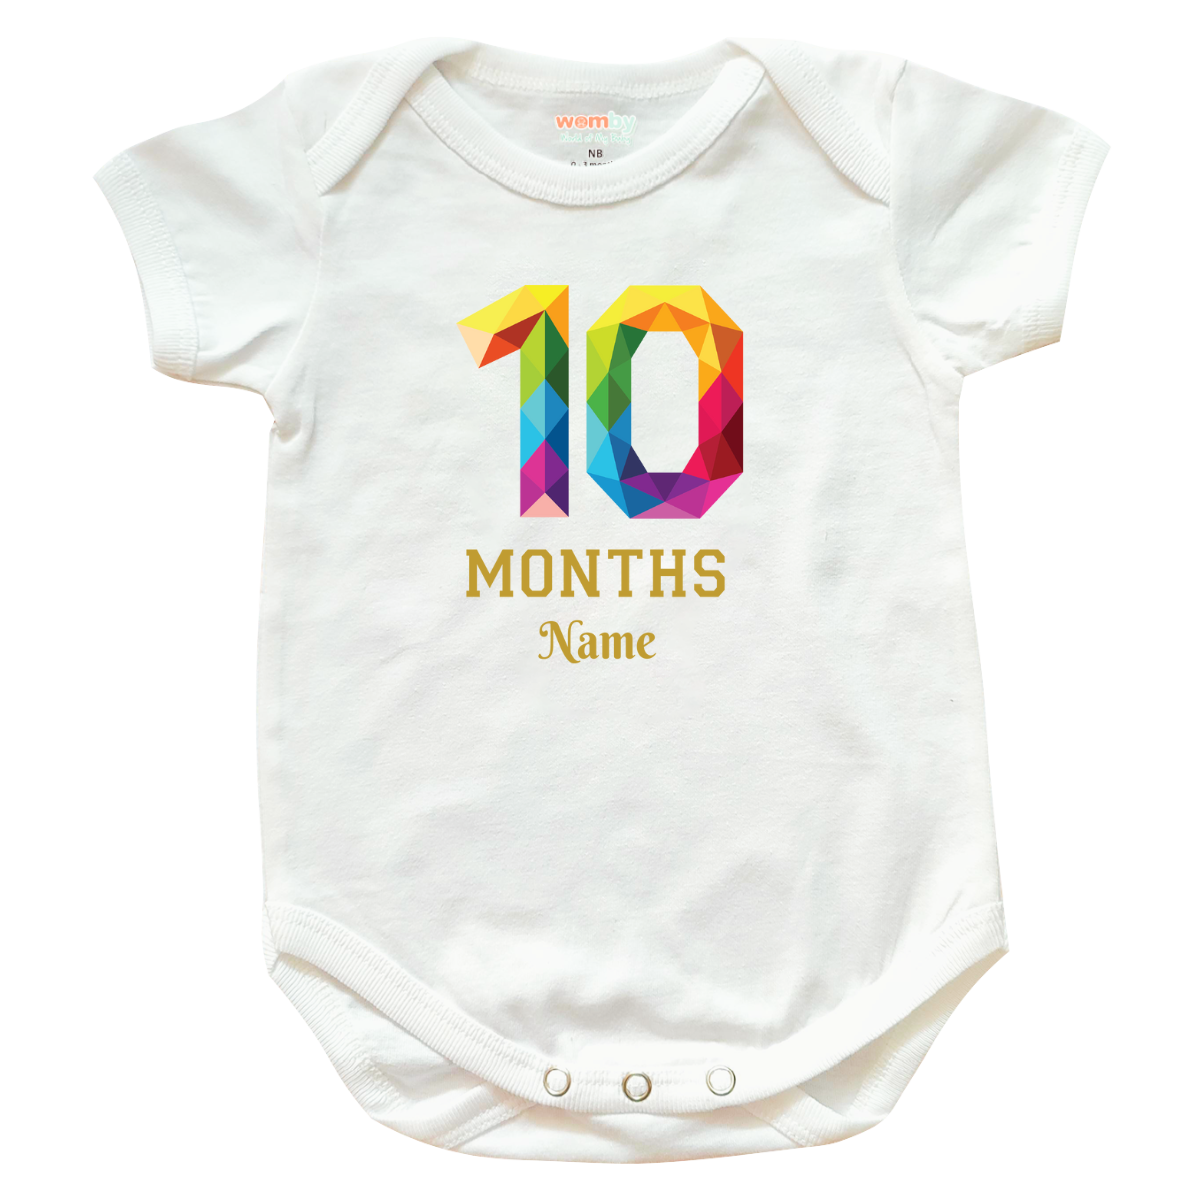 Milestone Emboss Numbers Baby Rompers - White 10